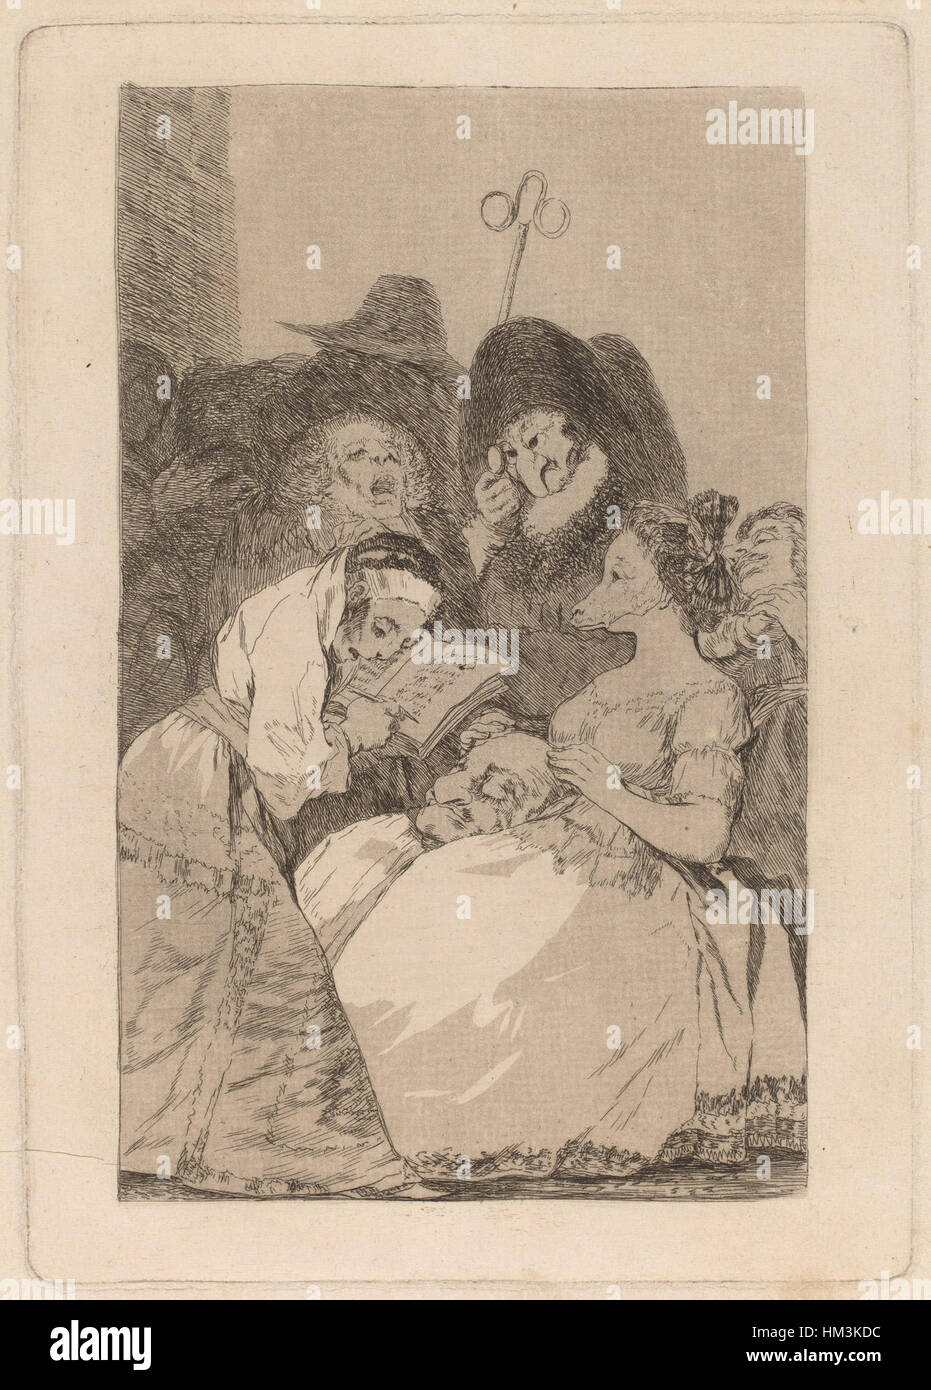 Goya - La filiacion (The Filiation) Stock Photo